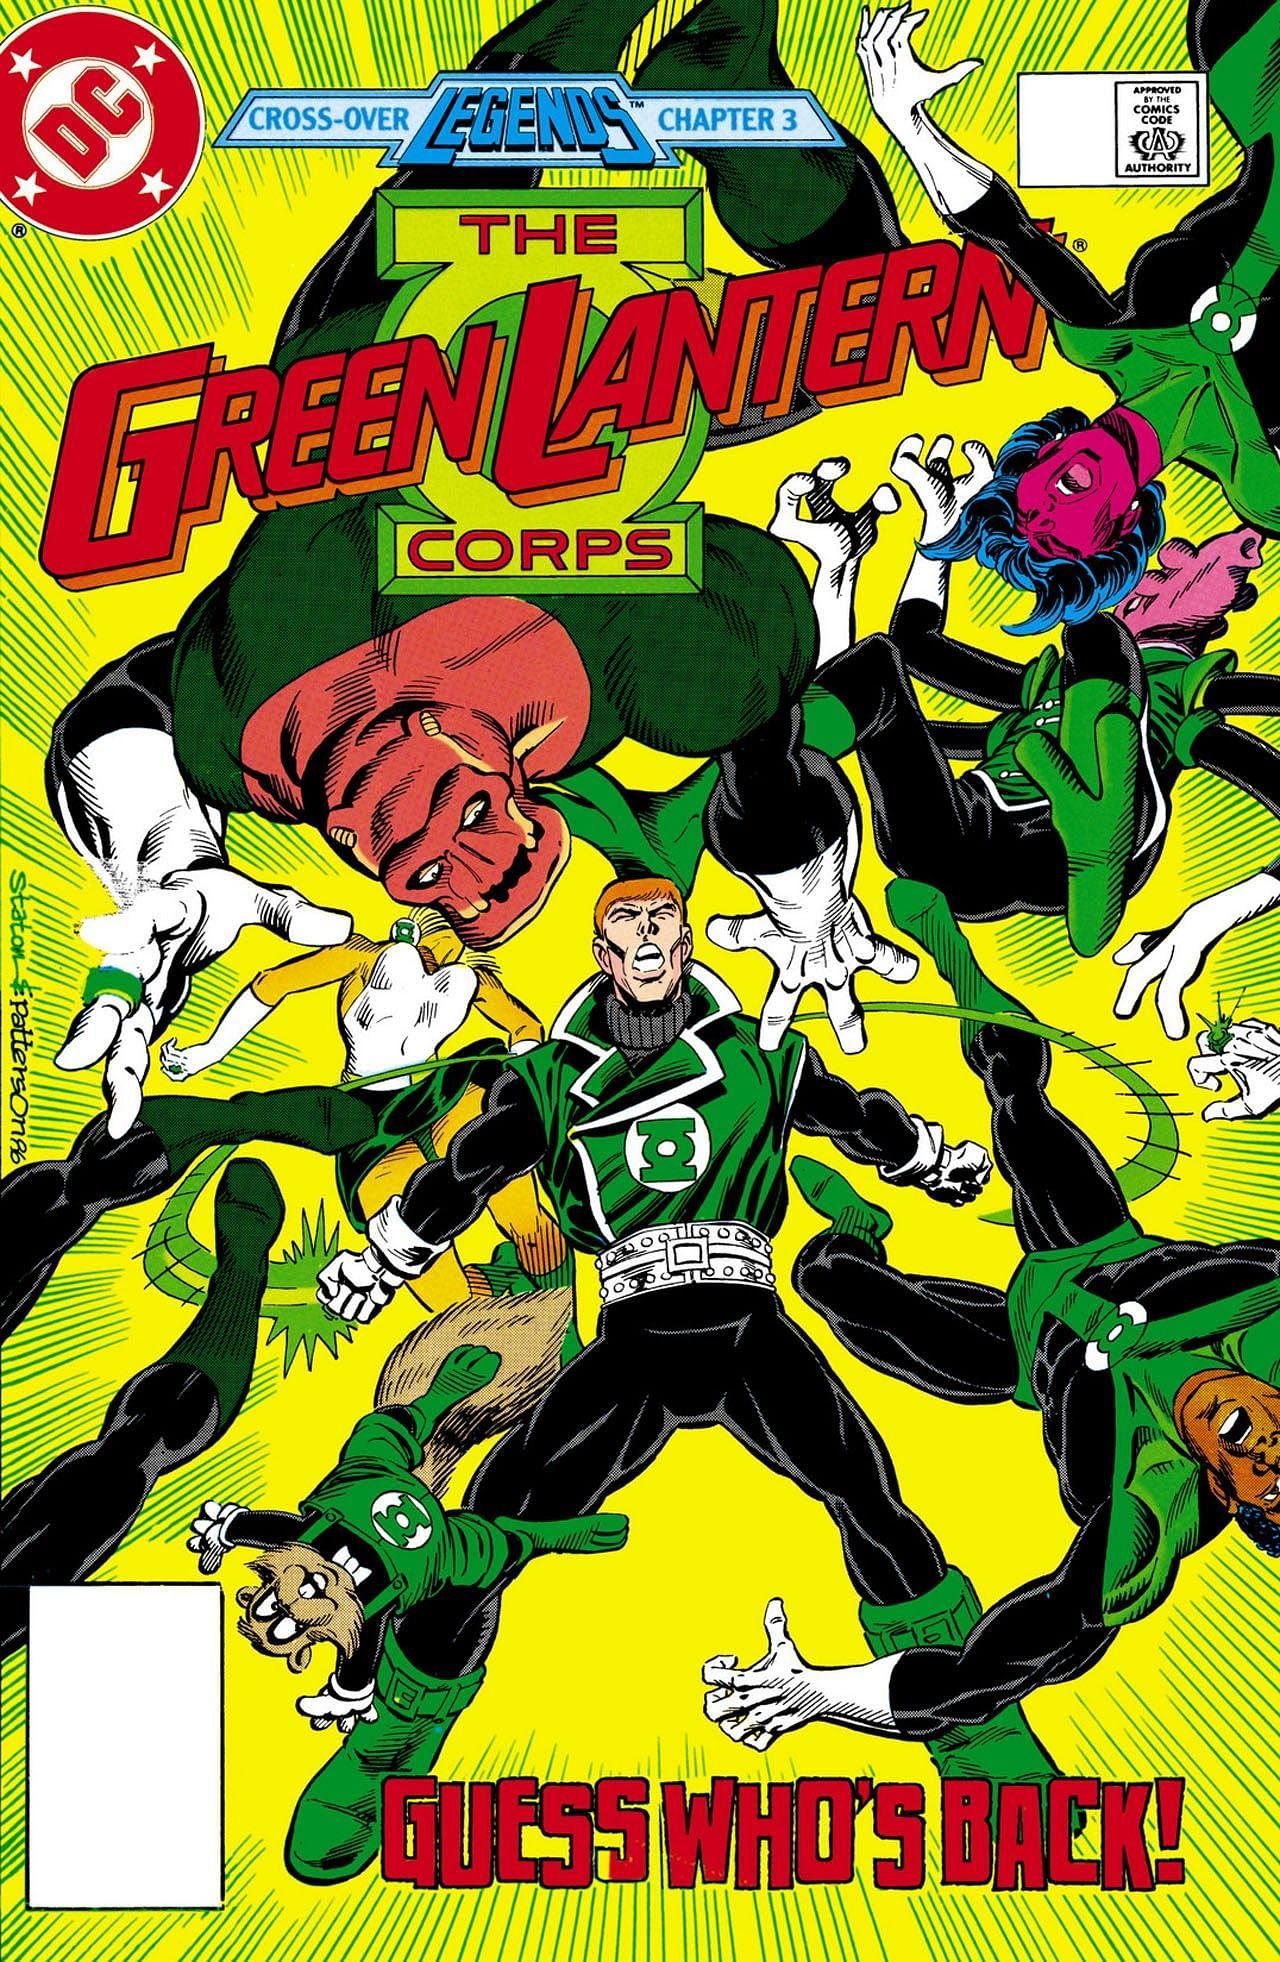 The Green Lantern Corps #207 (Image via DC Comics)